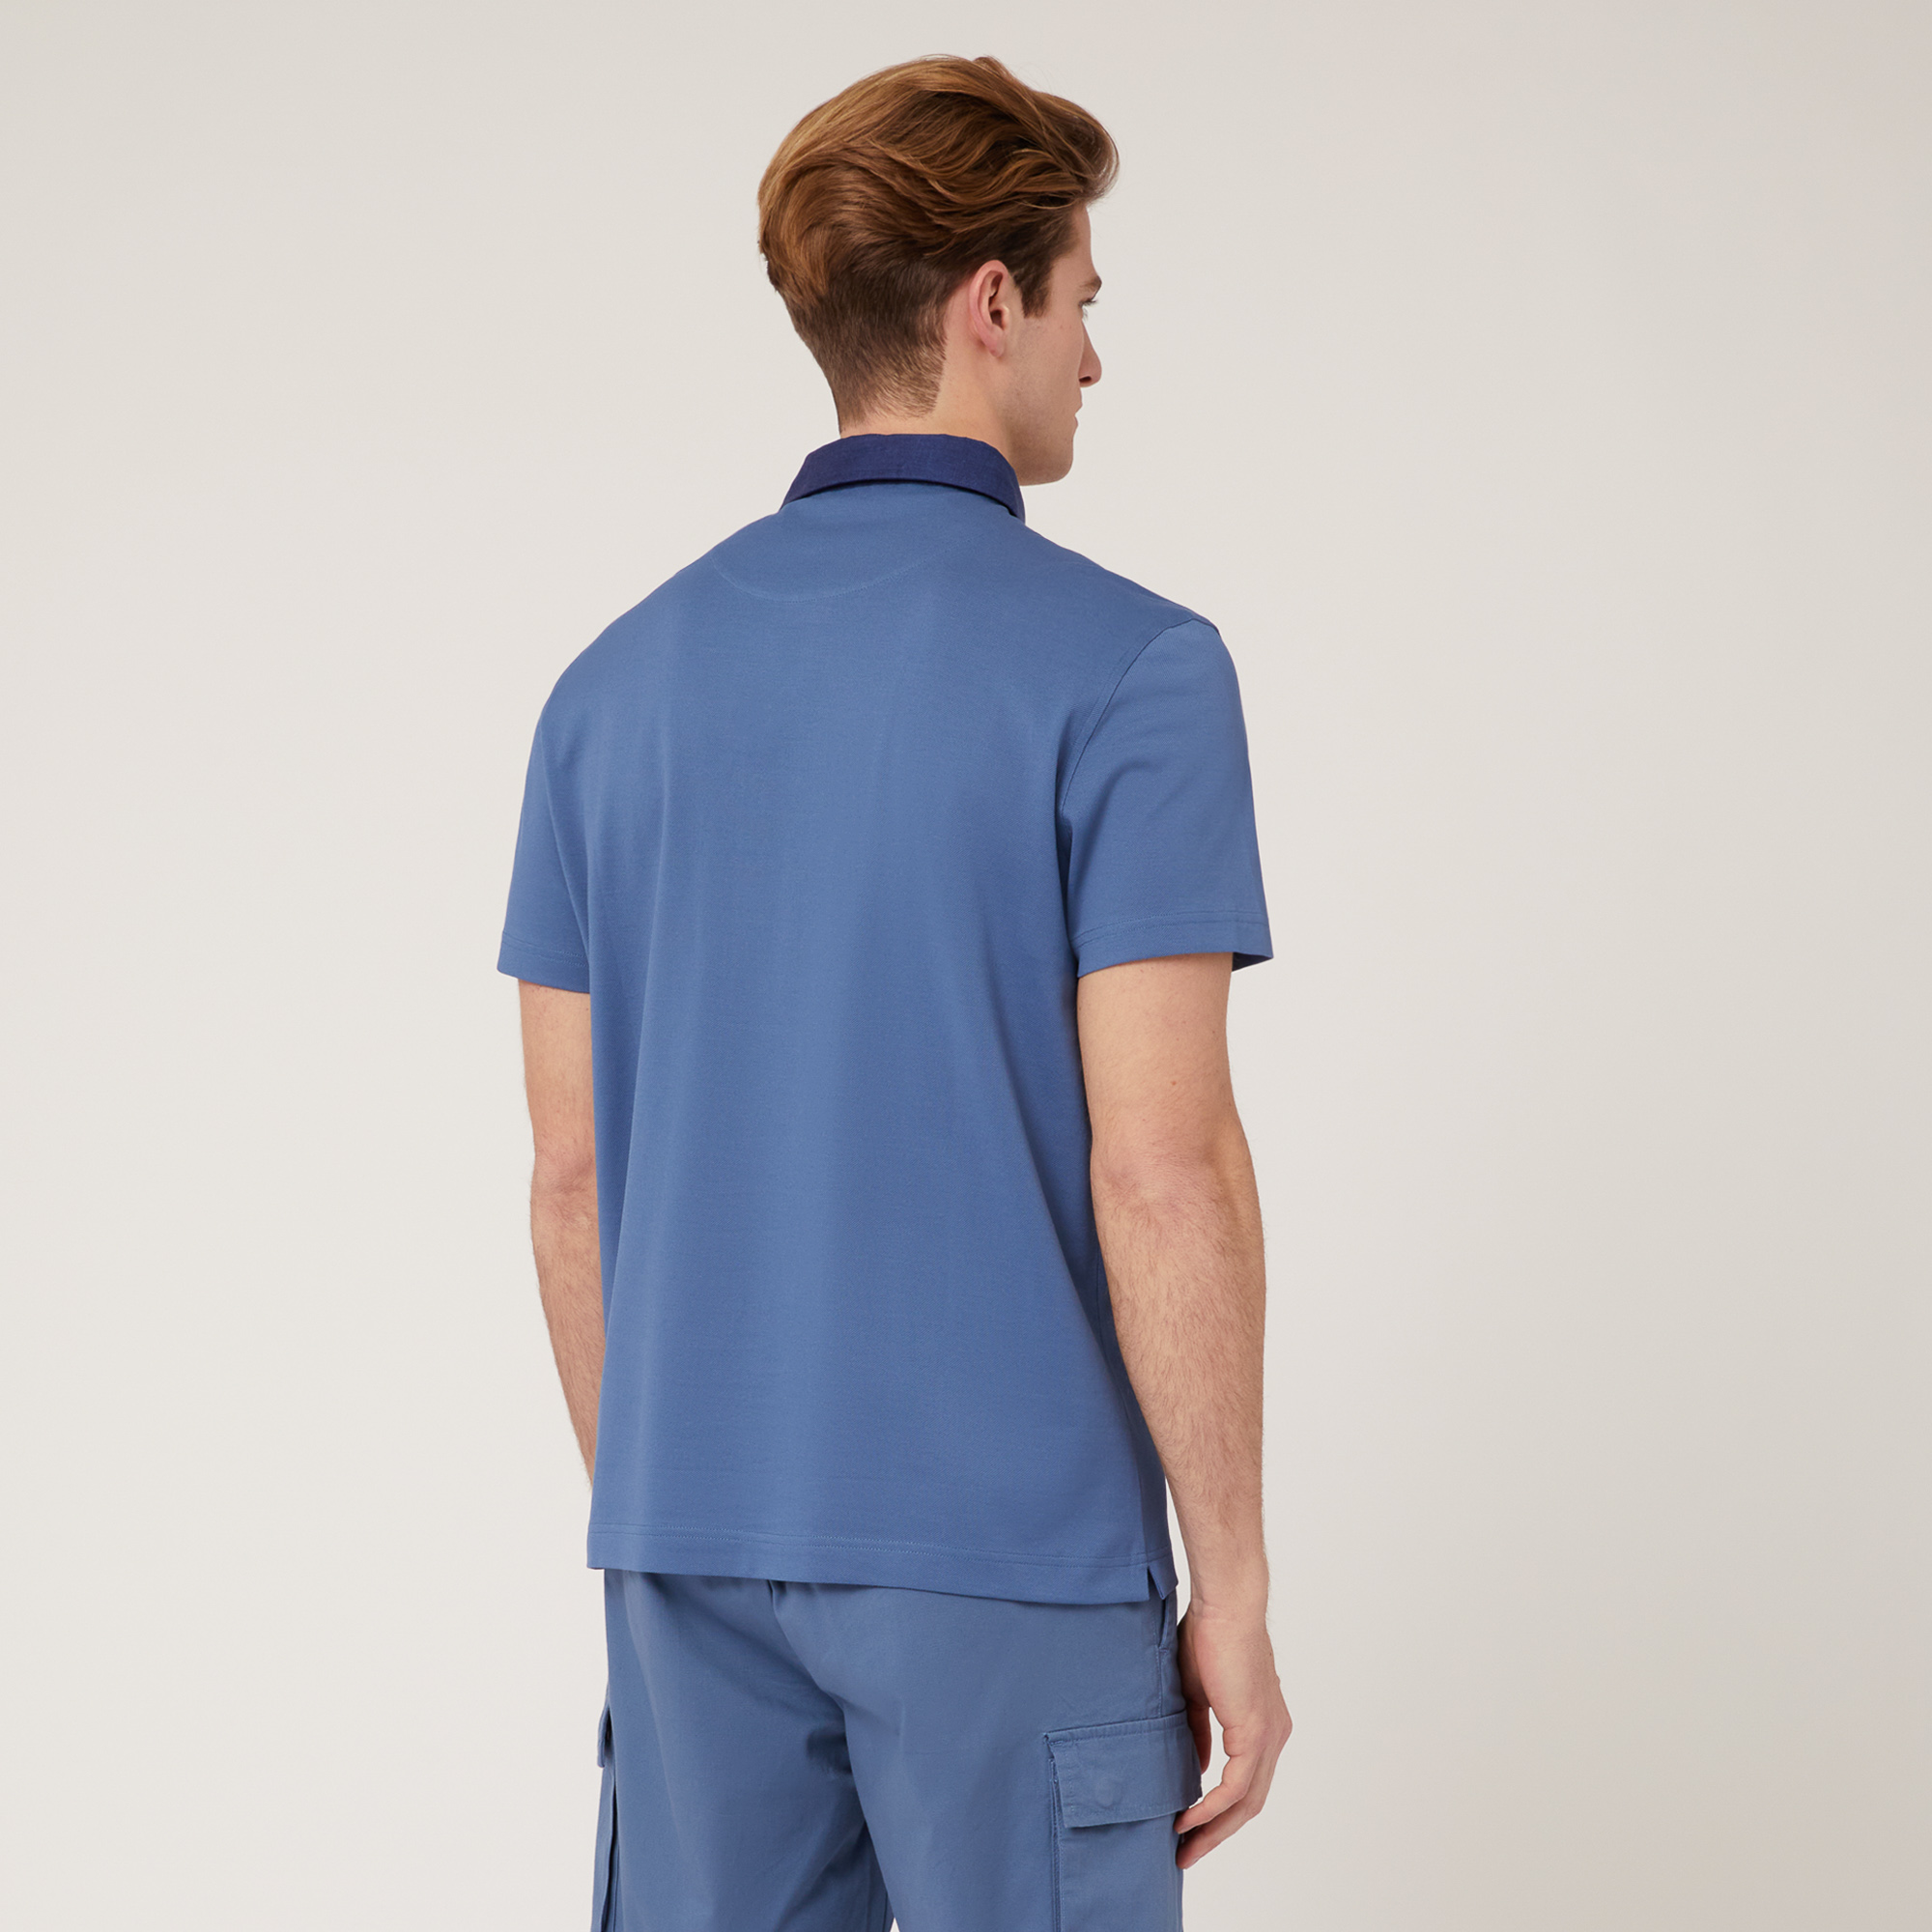 Poloshirt mit Brusttasche, Blau, large image number 1